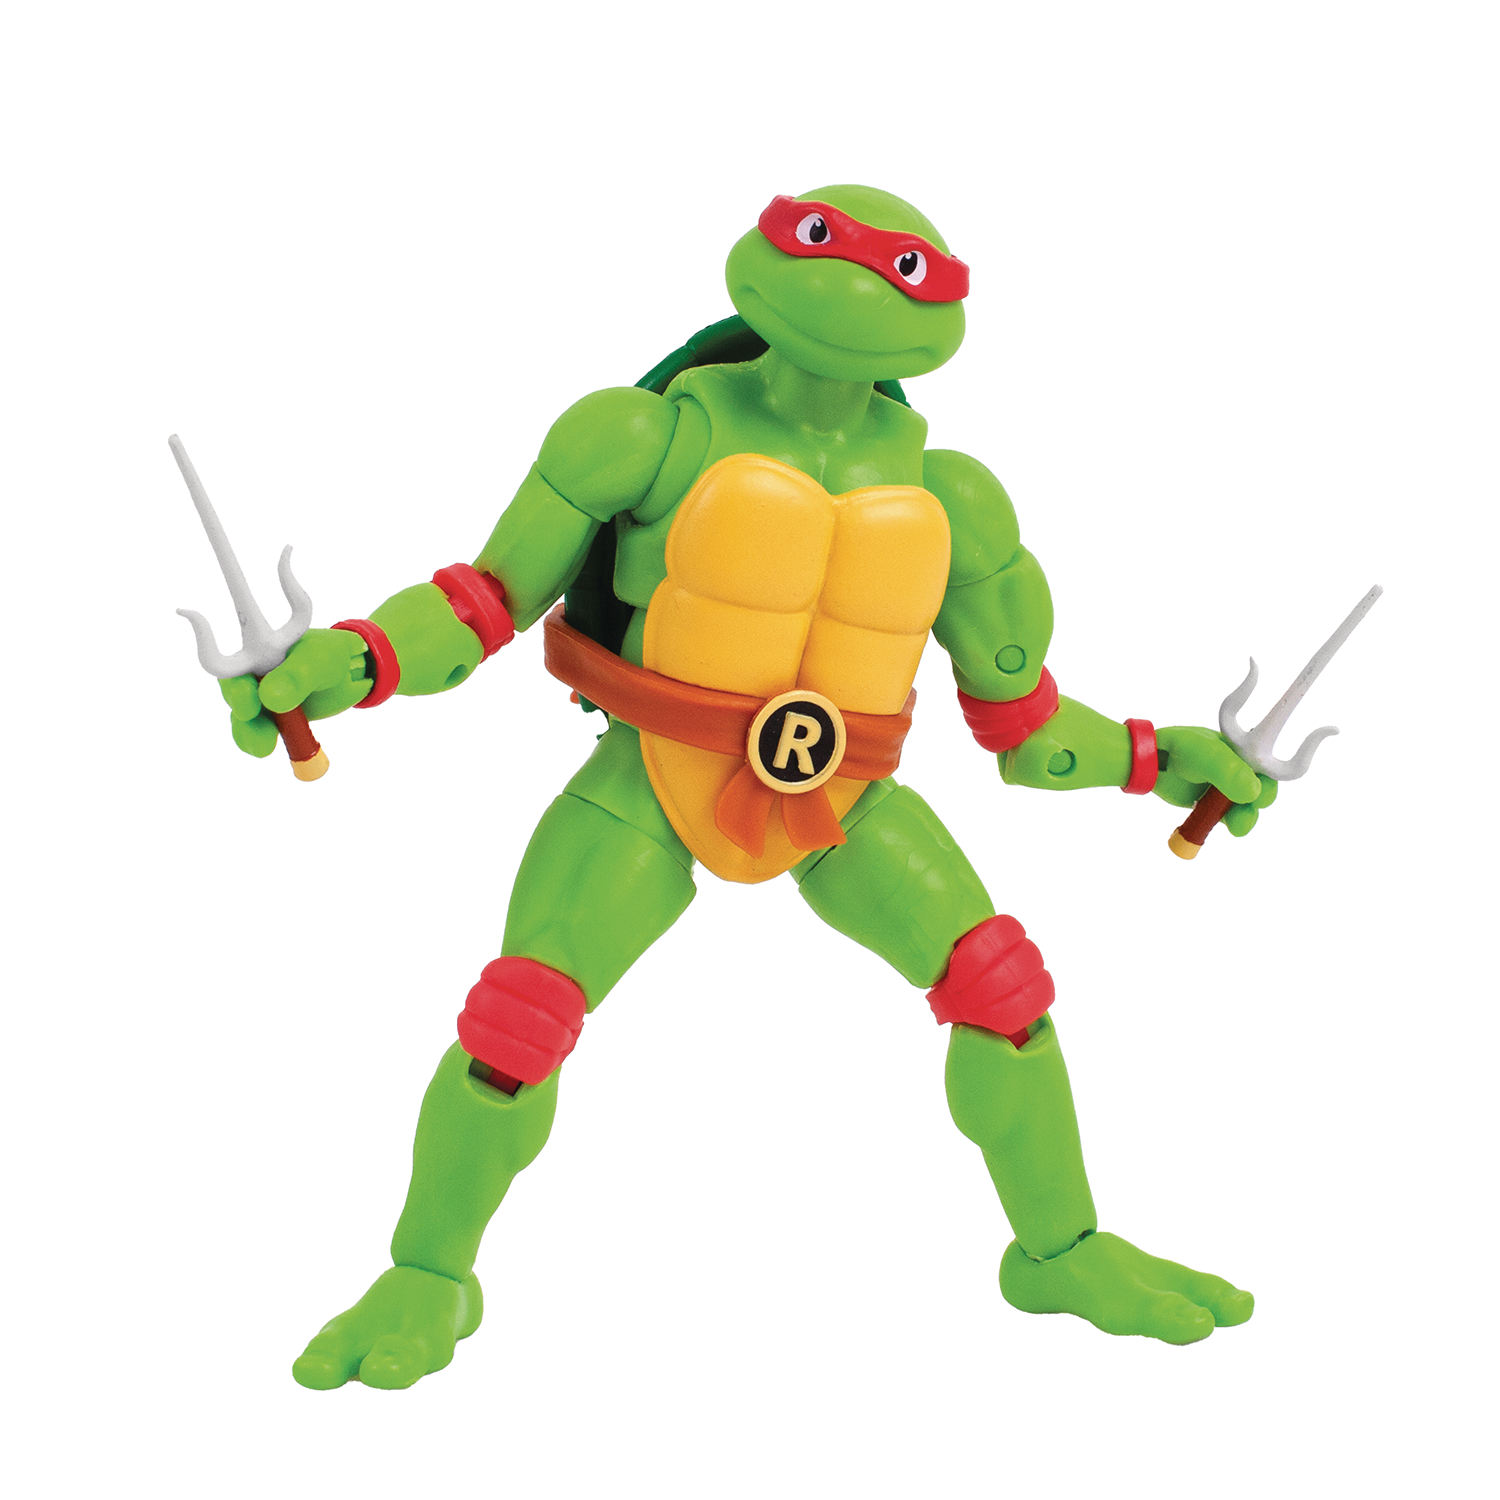 BST AXN Teenage Mutant Ninja Turtles Raphael 5 Inch Action Figure